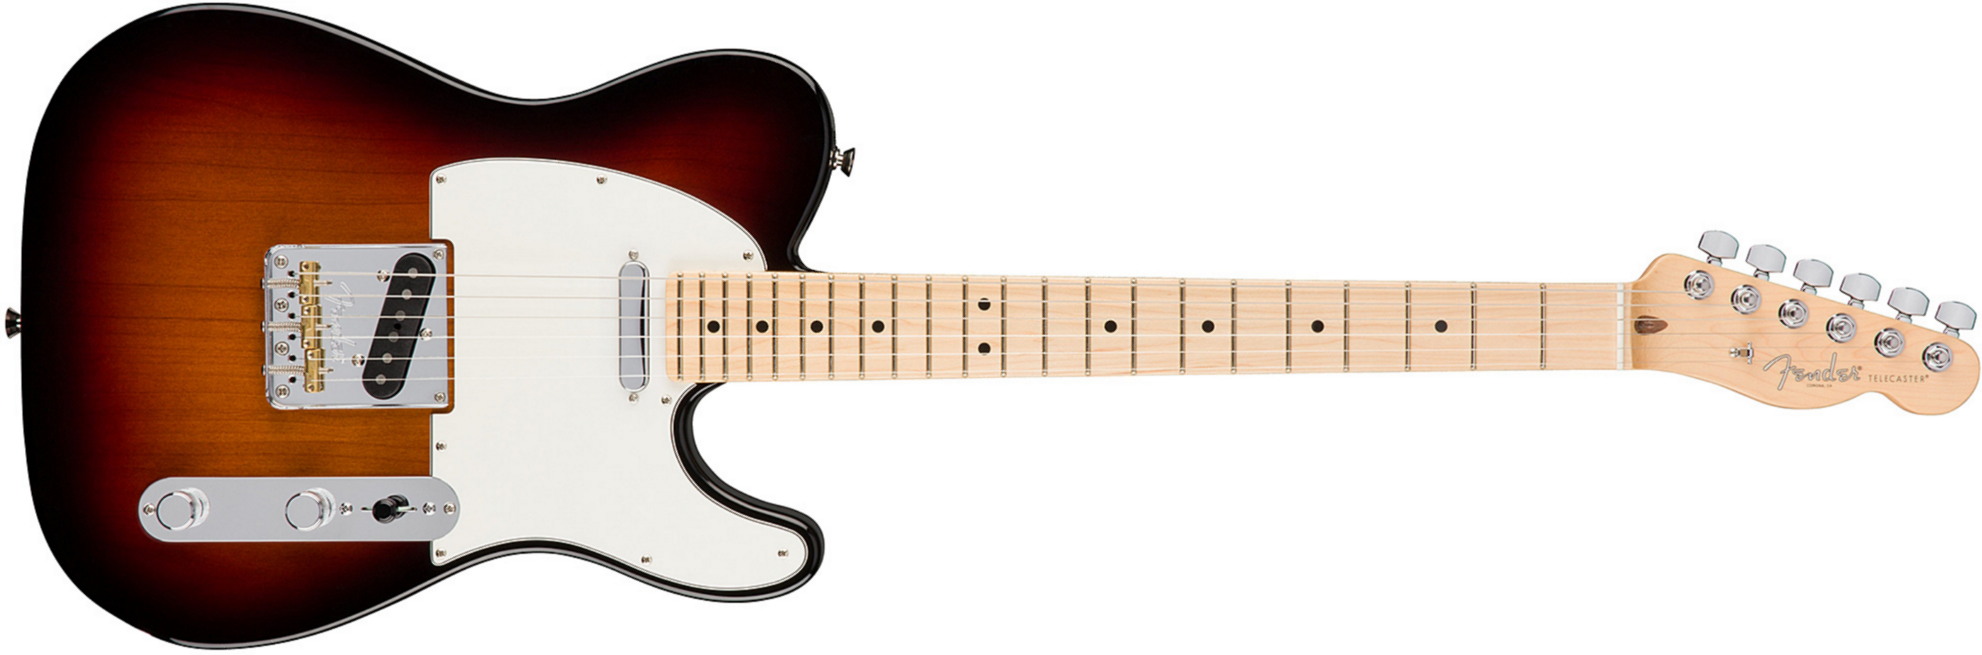 Fender Tele American Professional 2s Usa Mn - 3-color Sunburst - Guitarra eléctrica con forma de tel - Main picture